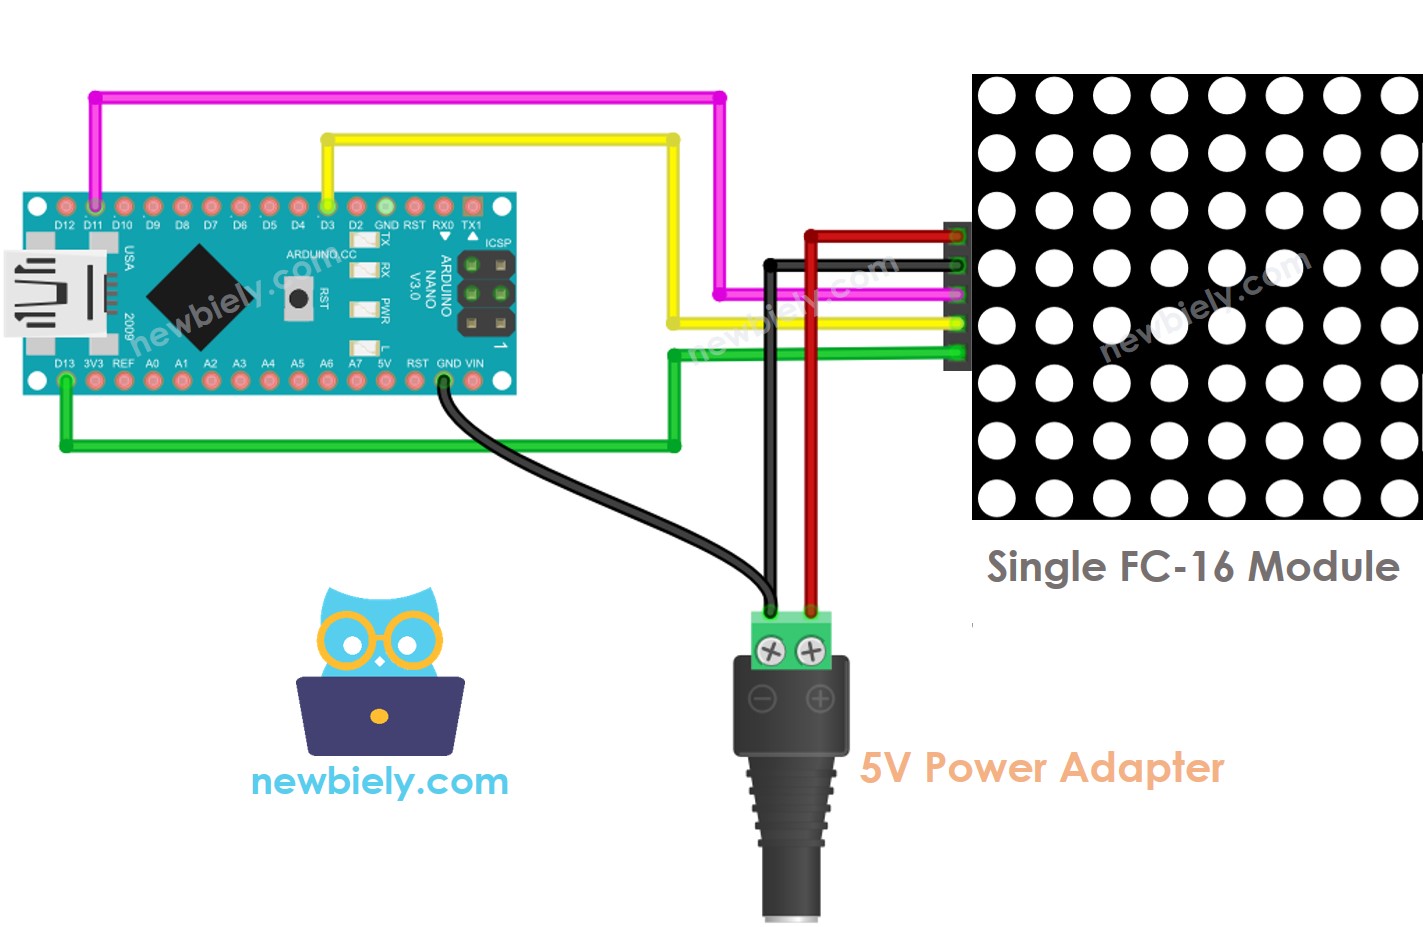 The wiring diagram between Arduino Nano and 8x8 LED matrix FC-16